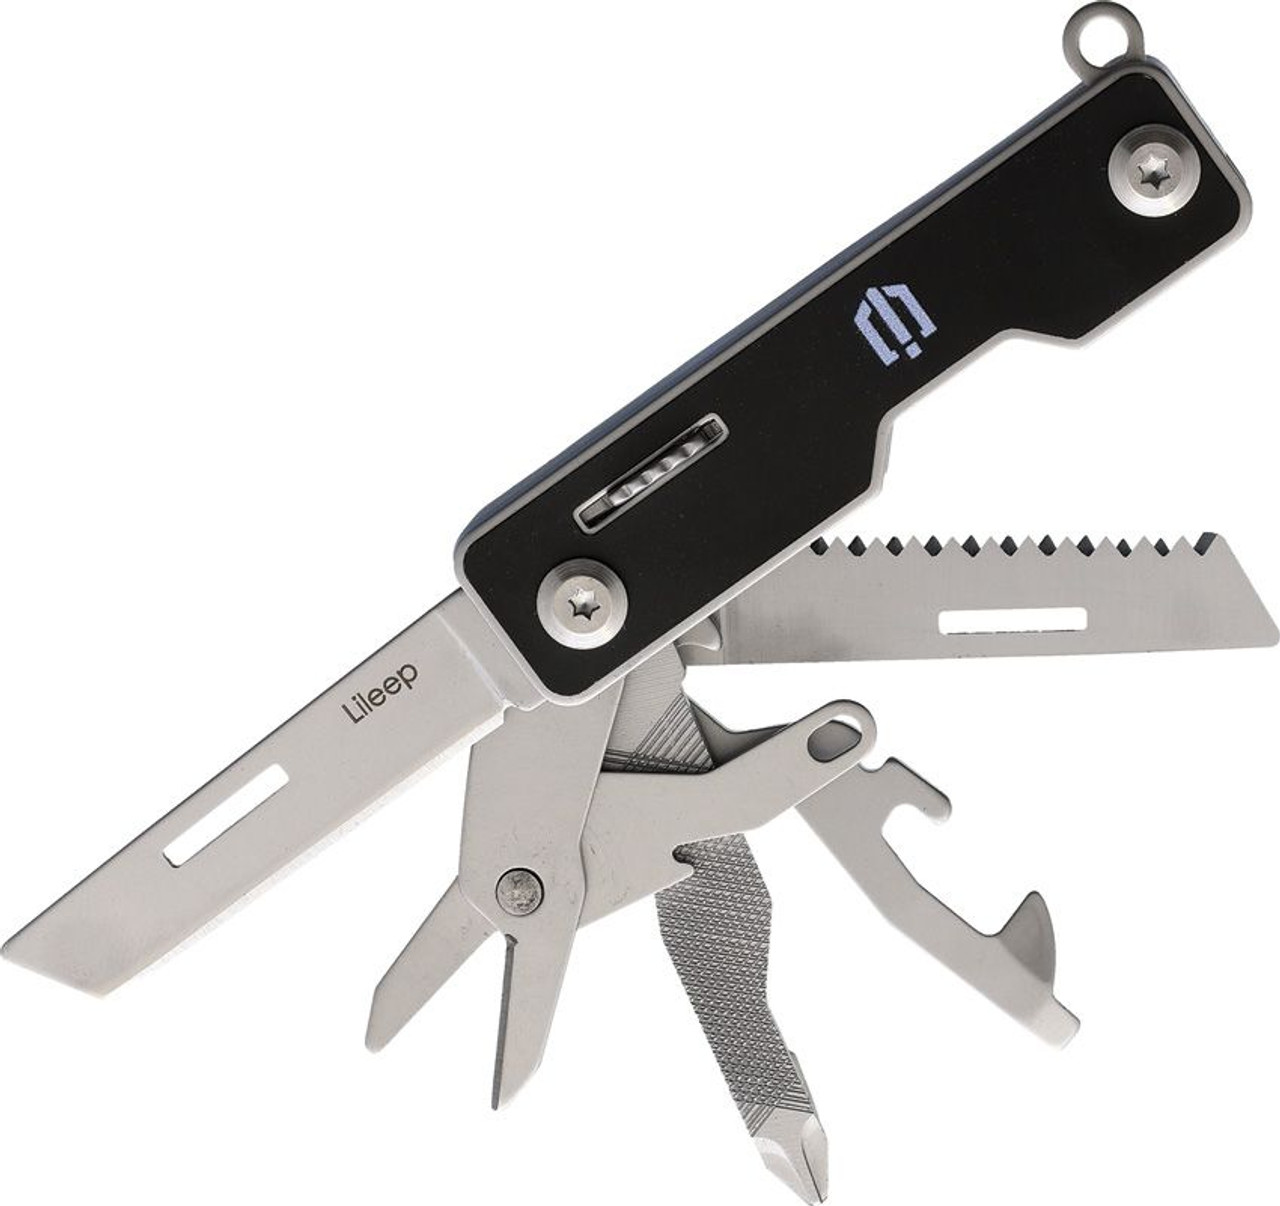 Shieldon Knives Lileep Multi Tool knife scissors saw screw drivers